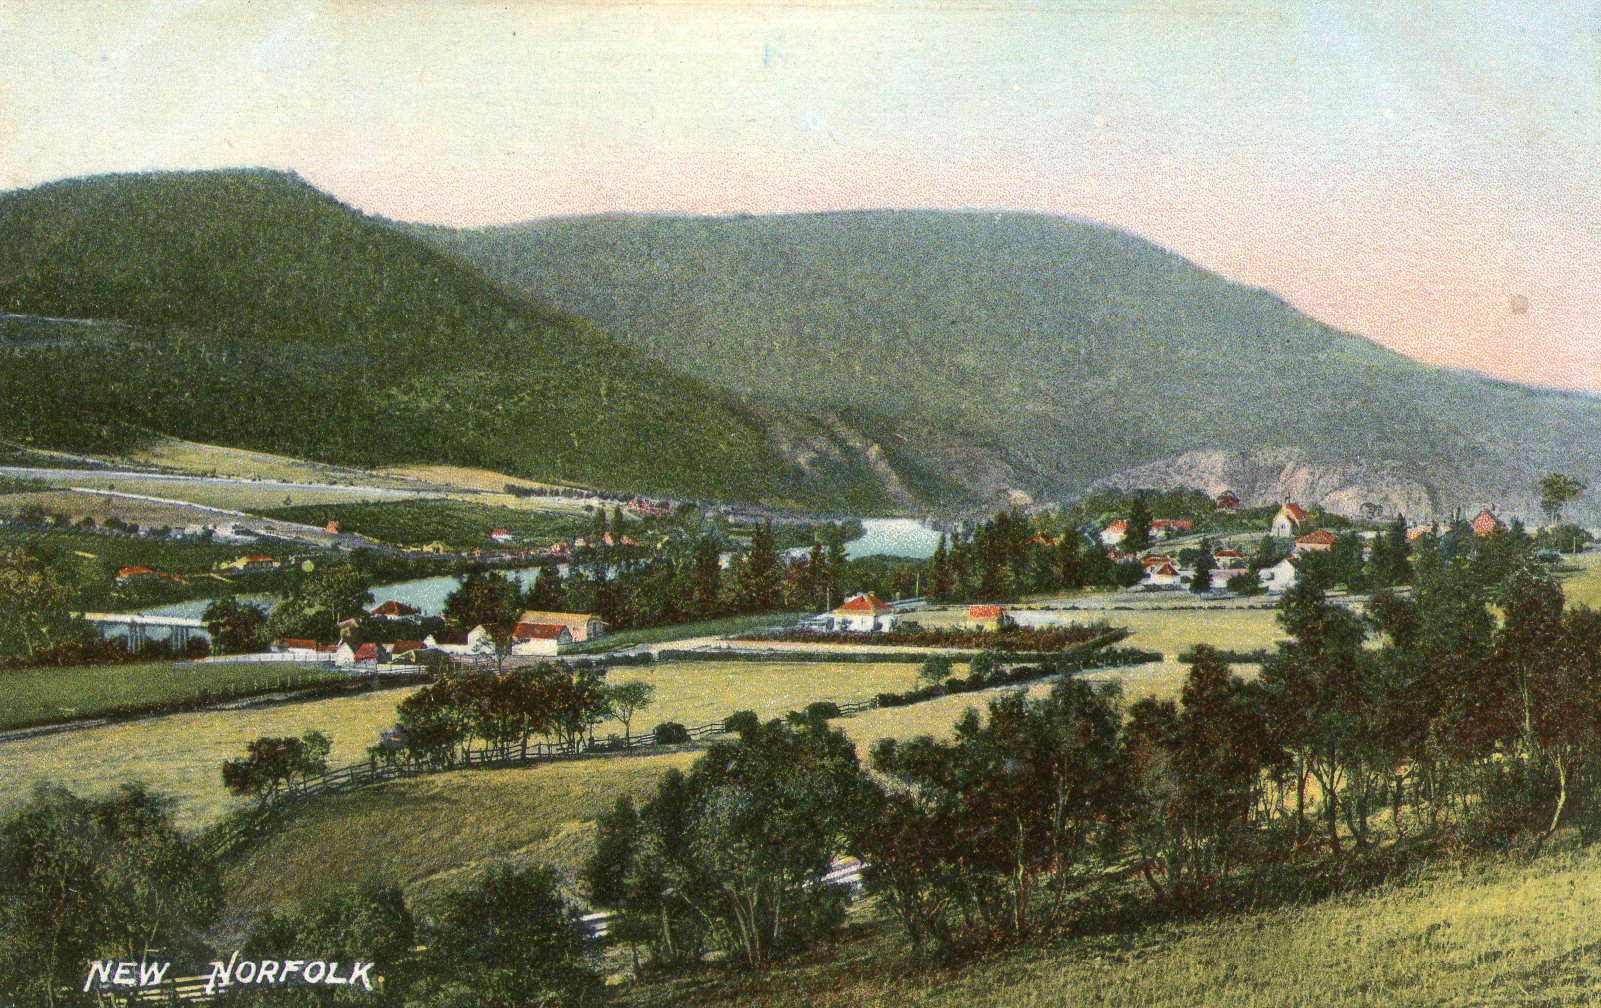 Scan of an old postcard of New Norfolk, Tasmania circa 1870